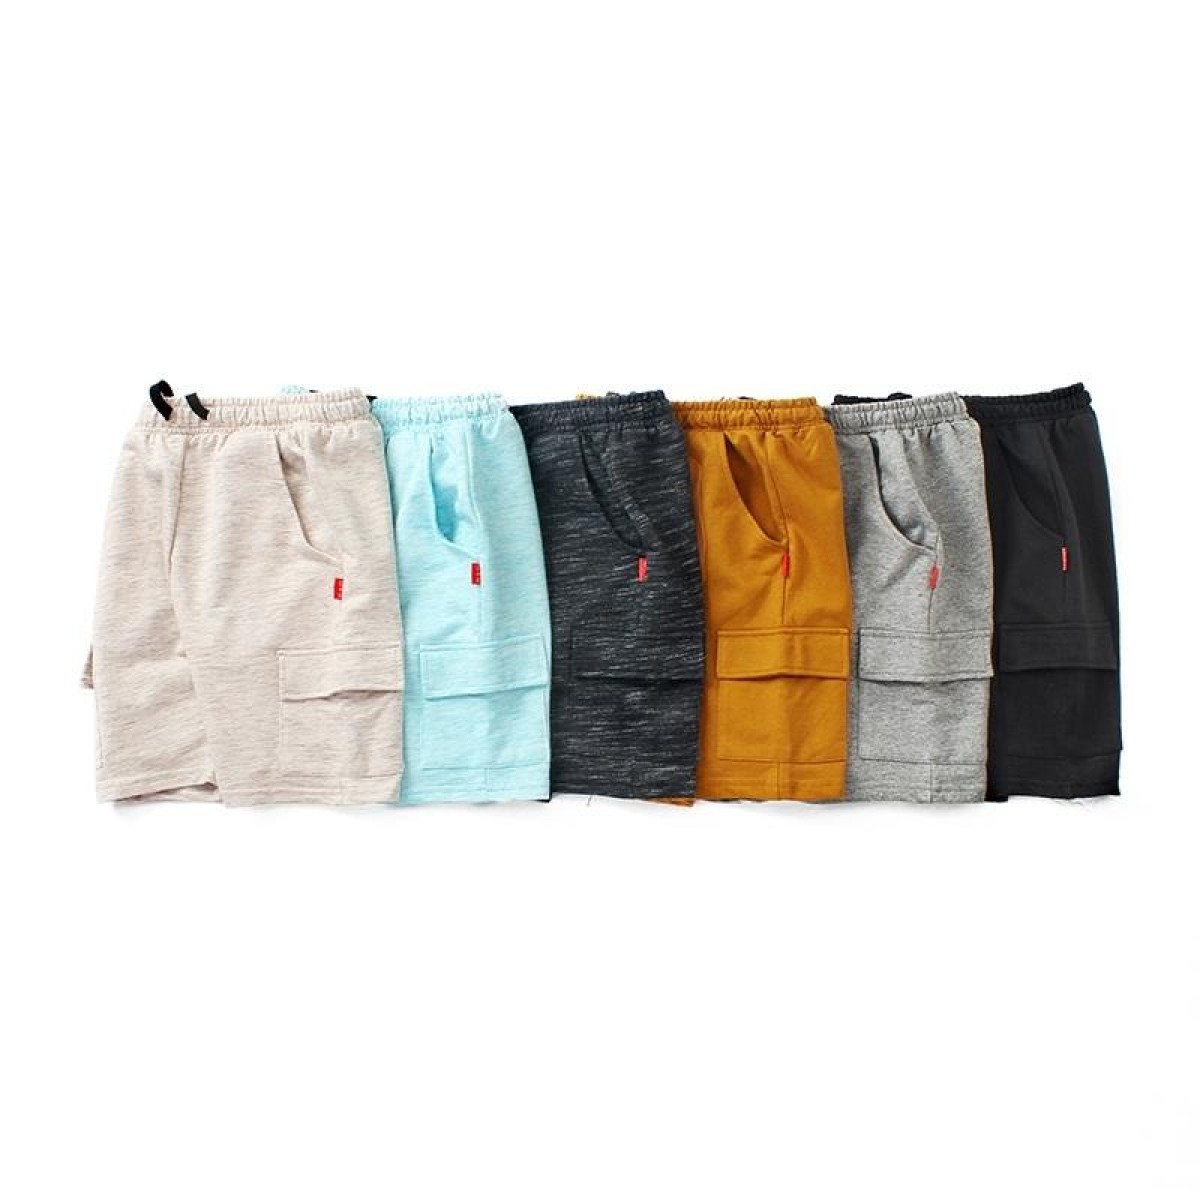 Boys Cotton Casual Overalls Shorts (Color:Iron Grey Size:150cm)